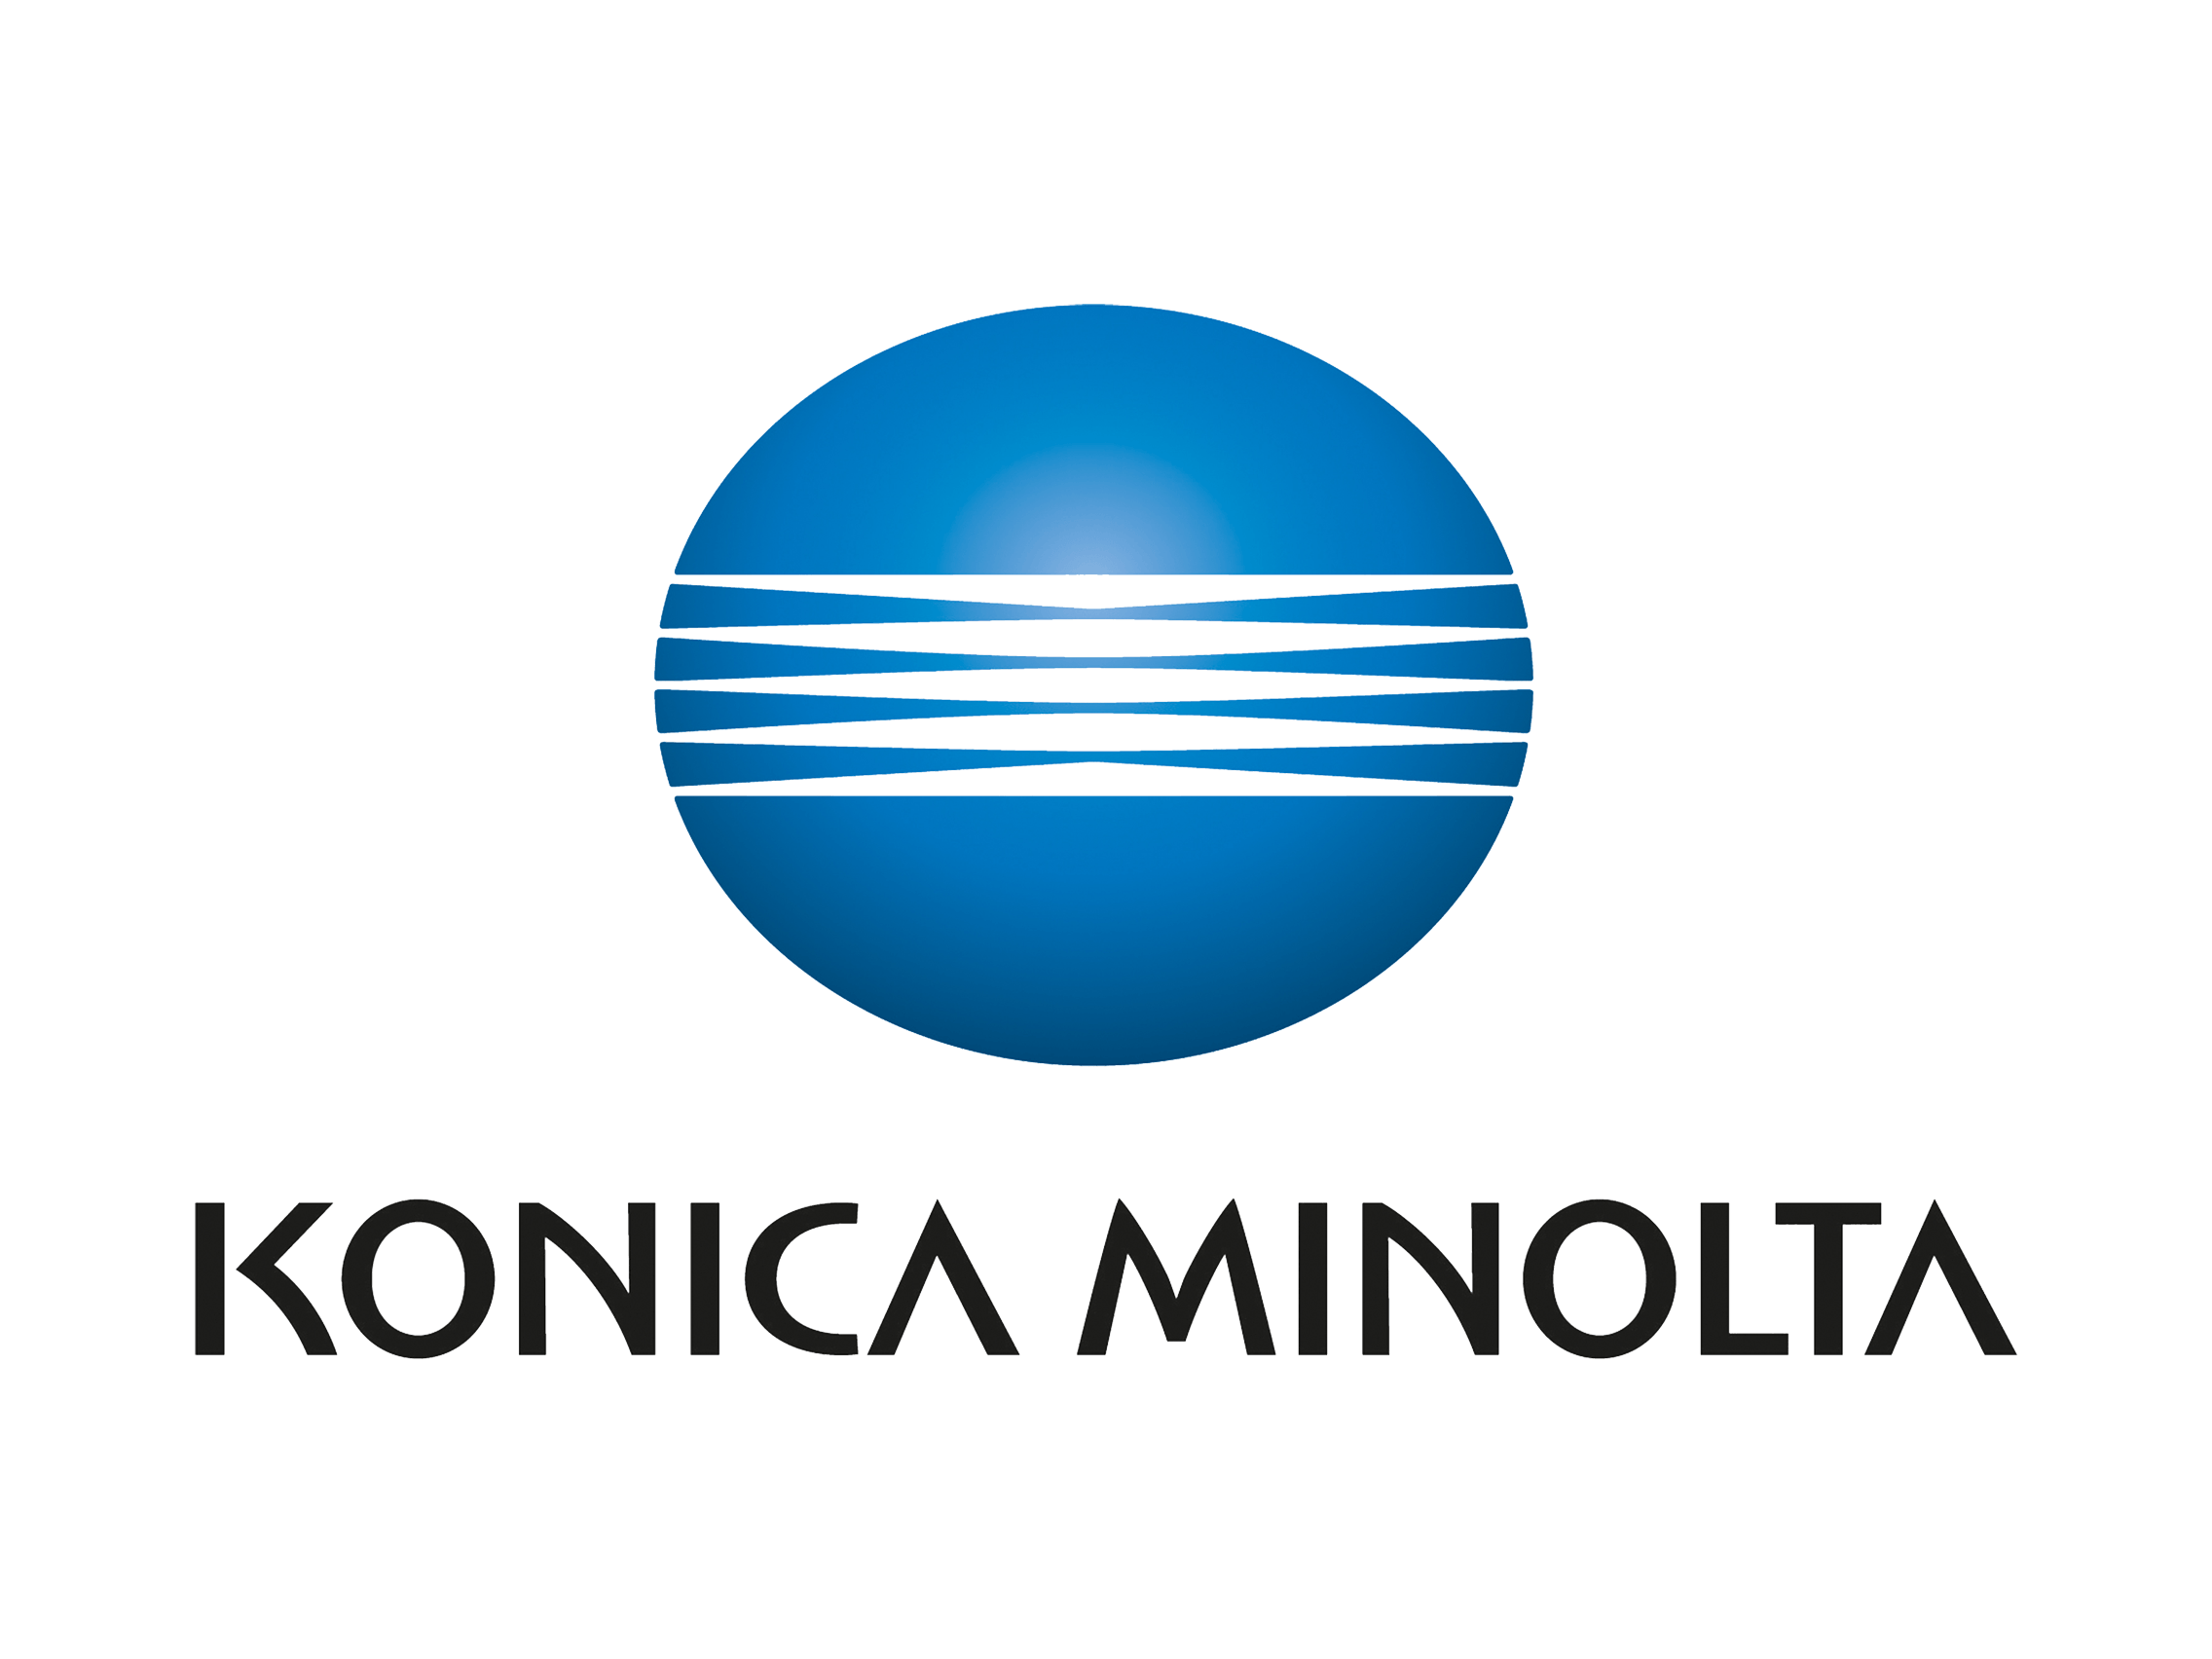 Konica Minolta Logo - Konica-Minolta-logo-and-wordmark | BAYtek Office Solutions